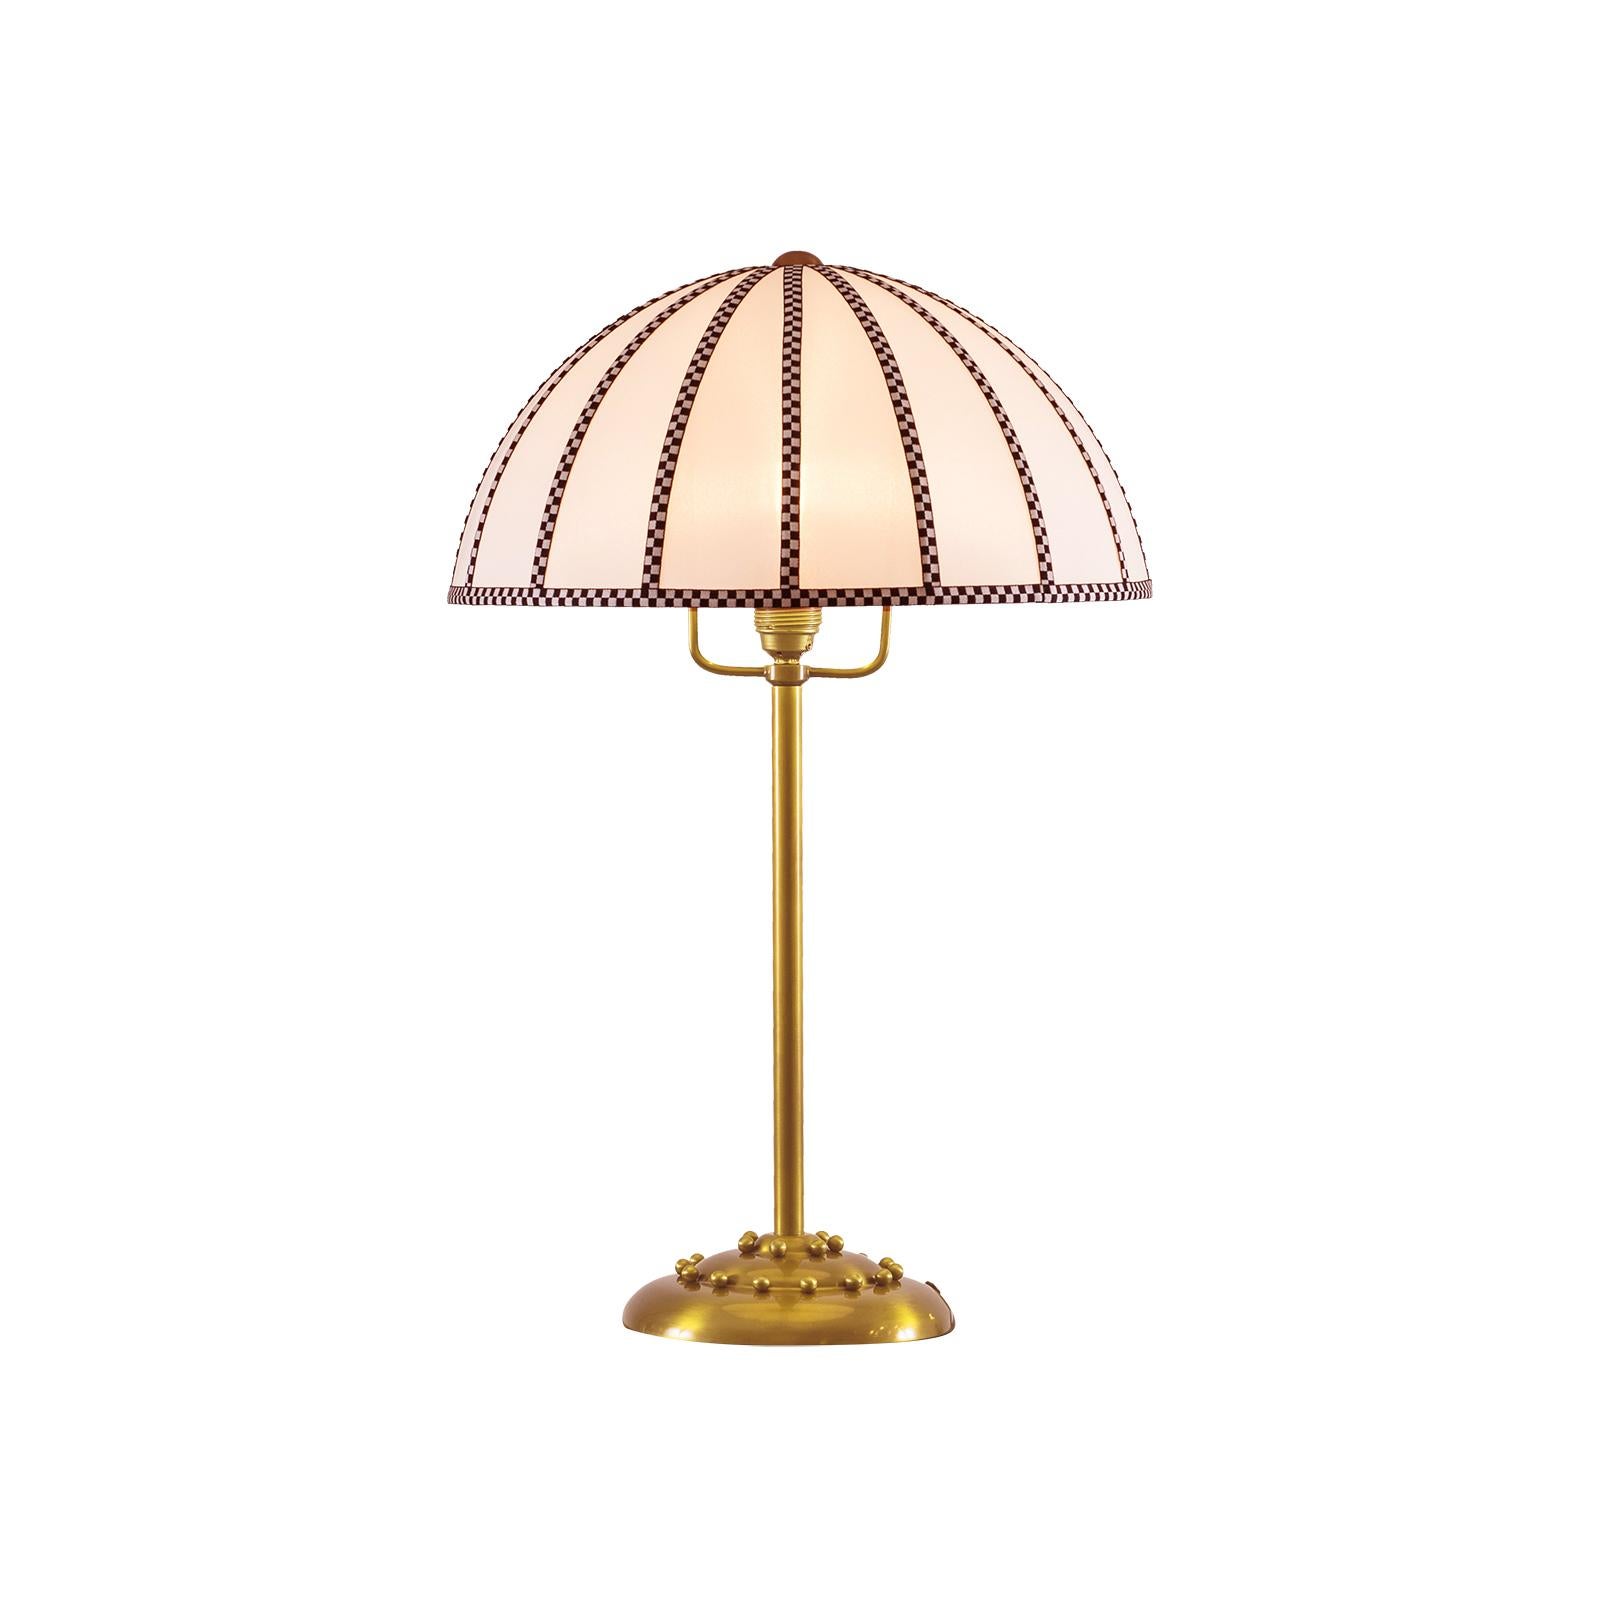 Austrian Josef Hoffmann Wiener Werkstätte Jugendstil Silk & Brass Table Lamp, Re-Edition For Sale